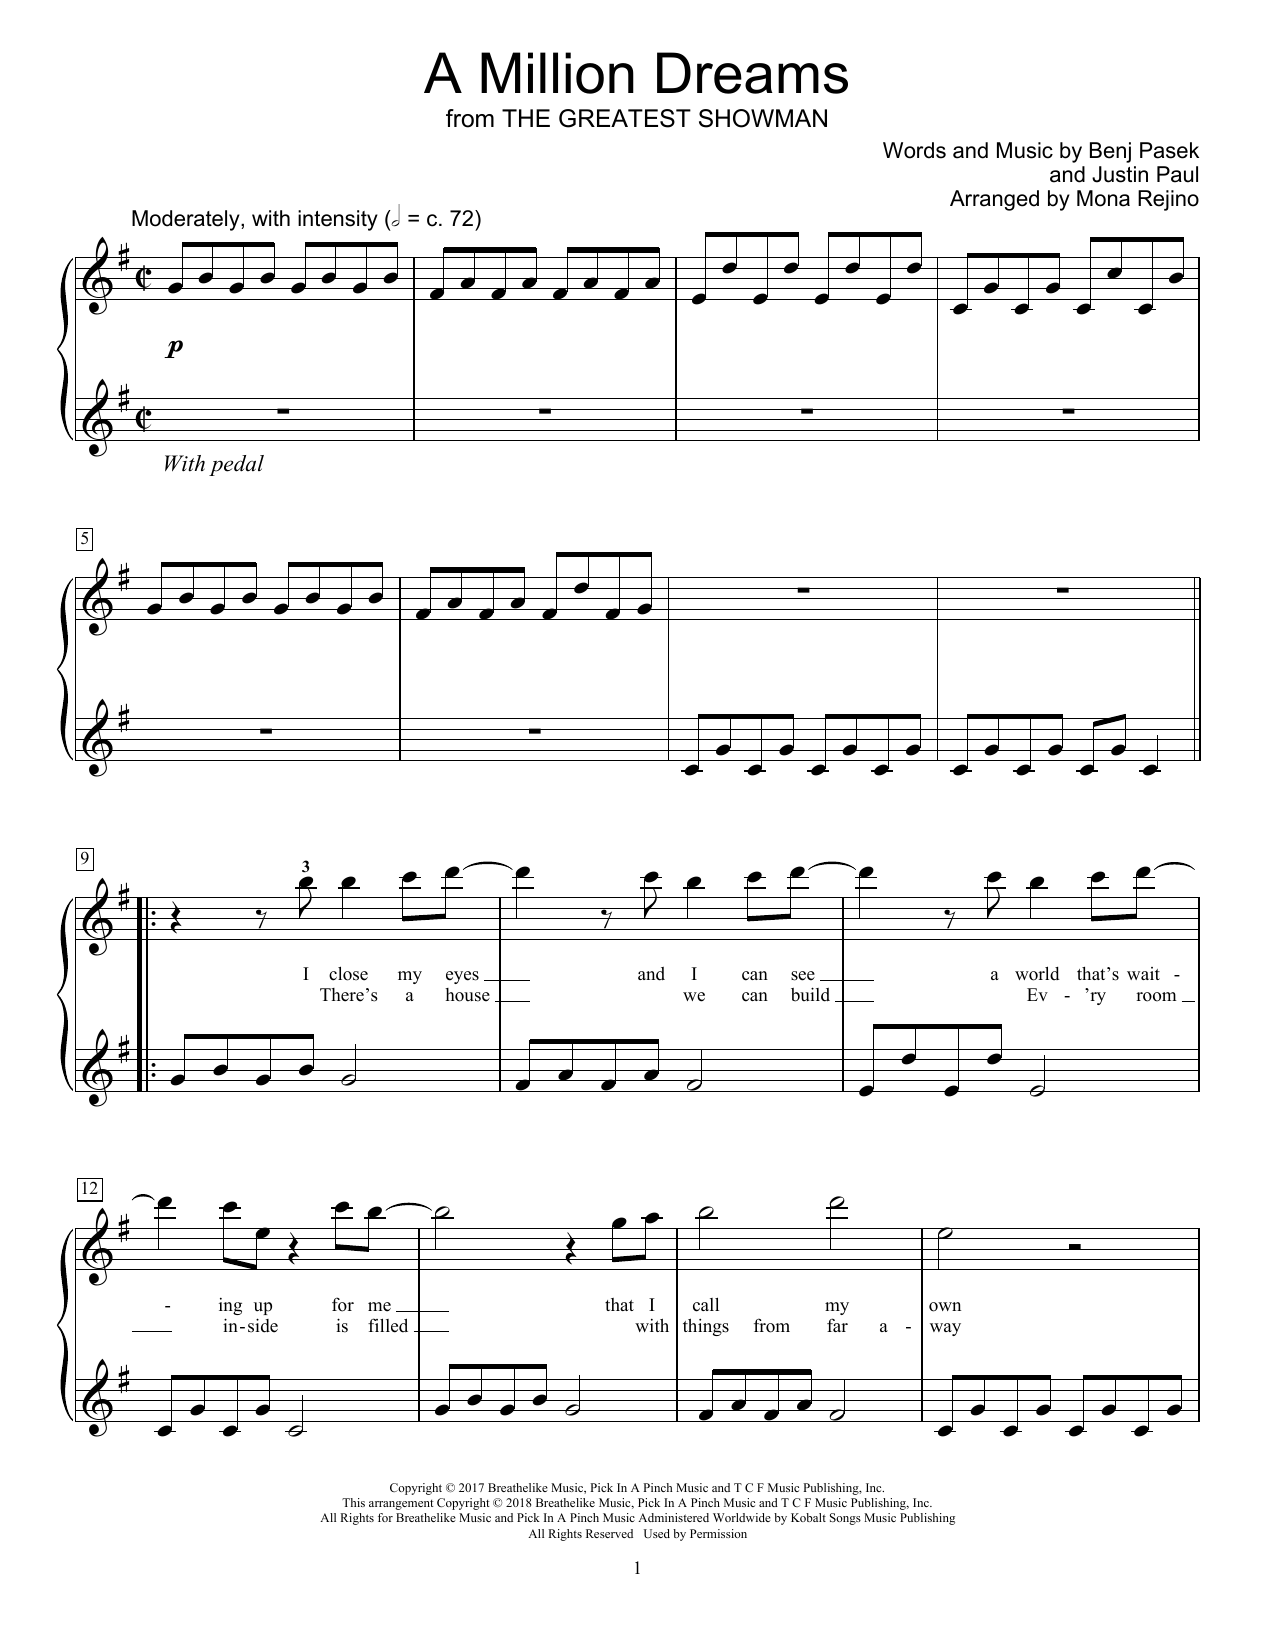 Pasek & Paul A Million Dreams (from The Greatest Showman) (arr. Mona Rejino) sheet music notes printable PDF score